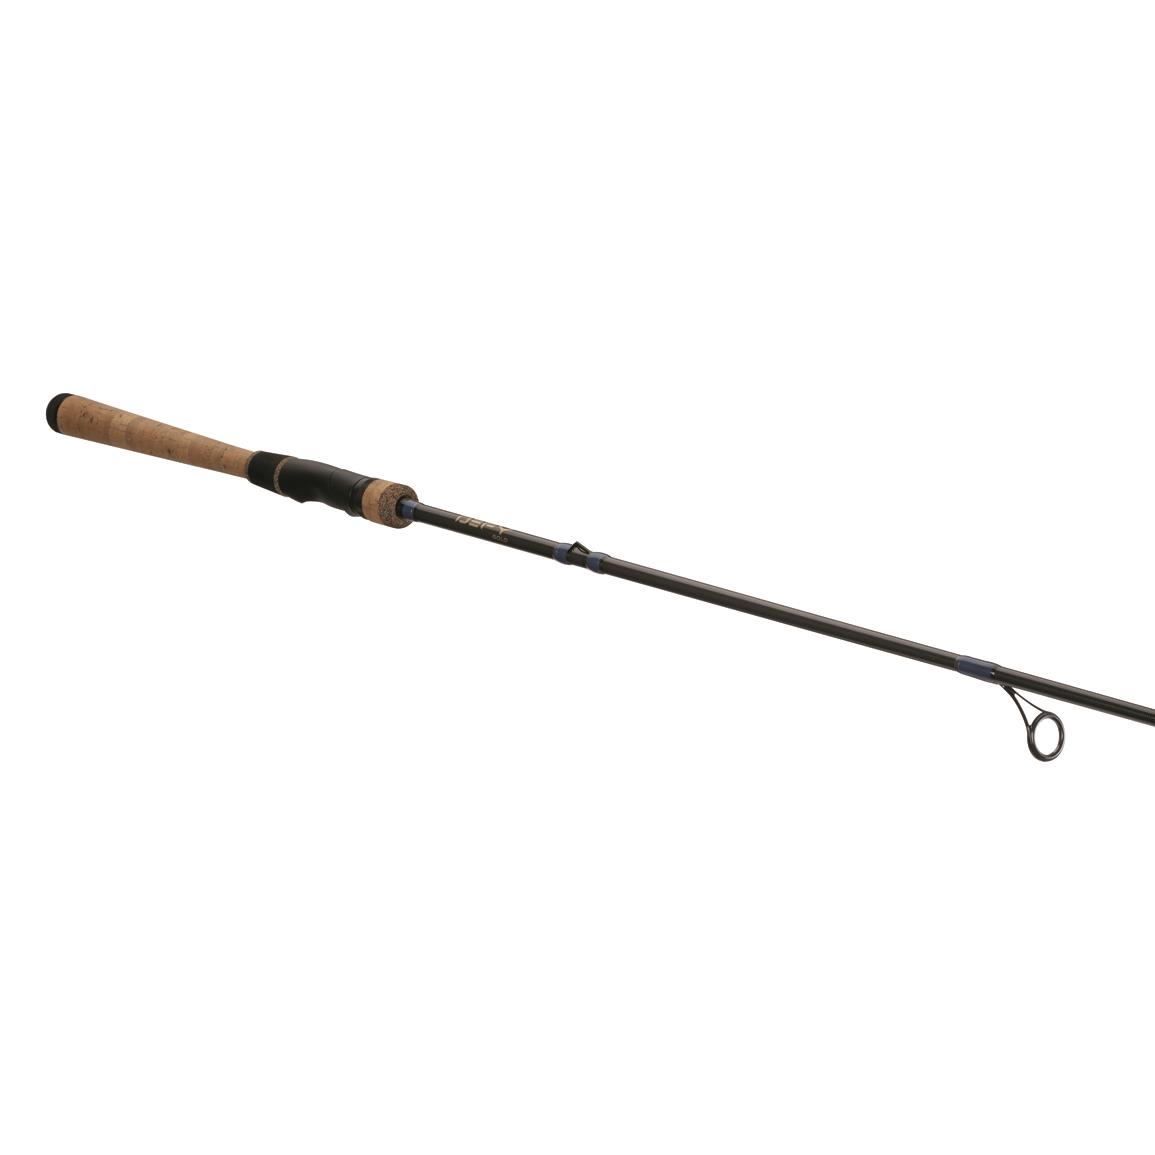 13 Fishing Ambition Youth Spinning Rod, 4'6 Length, Medium Light